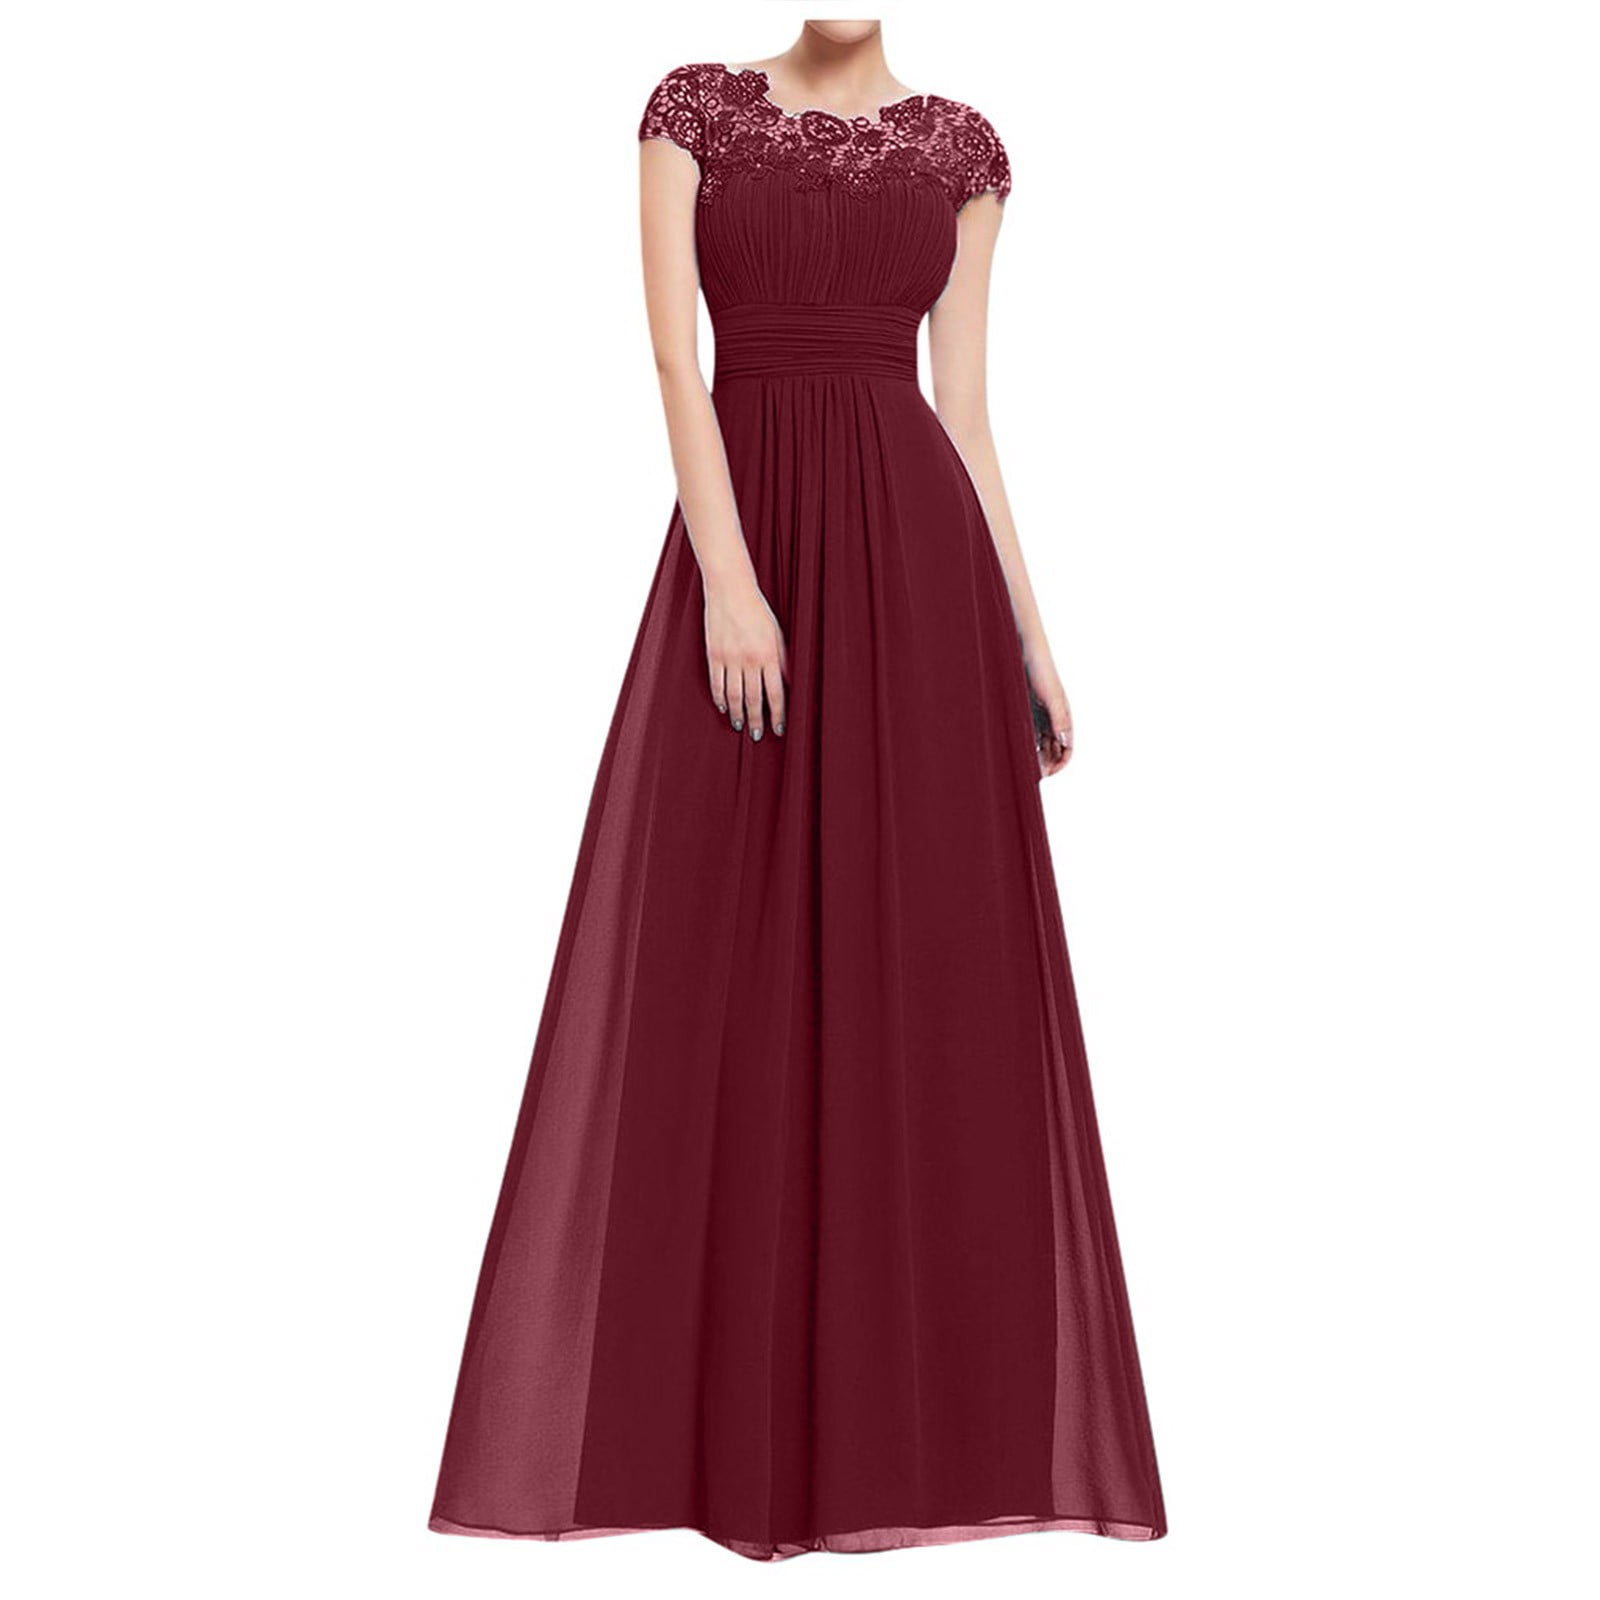 Olyvenn Tunic Maxi Ball Gown Prom Dress for Women Fashion Short Sleeve ...